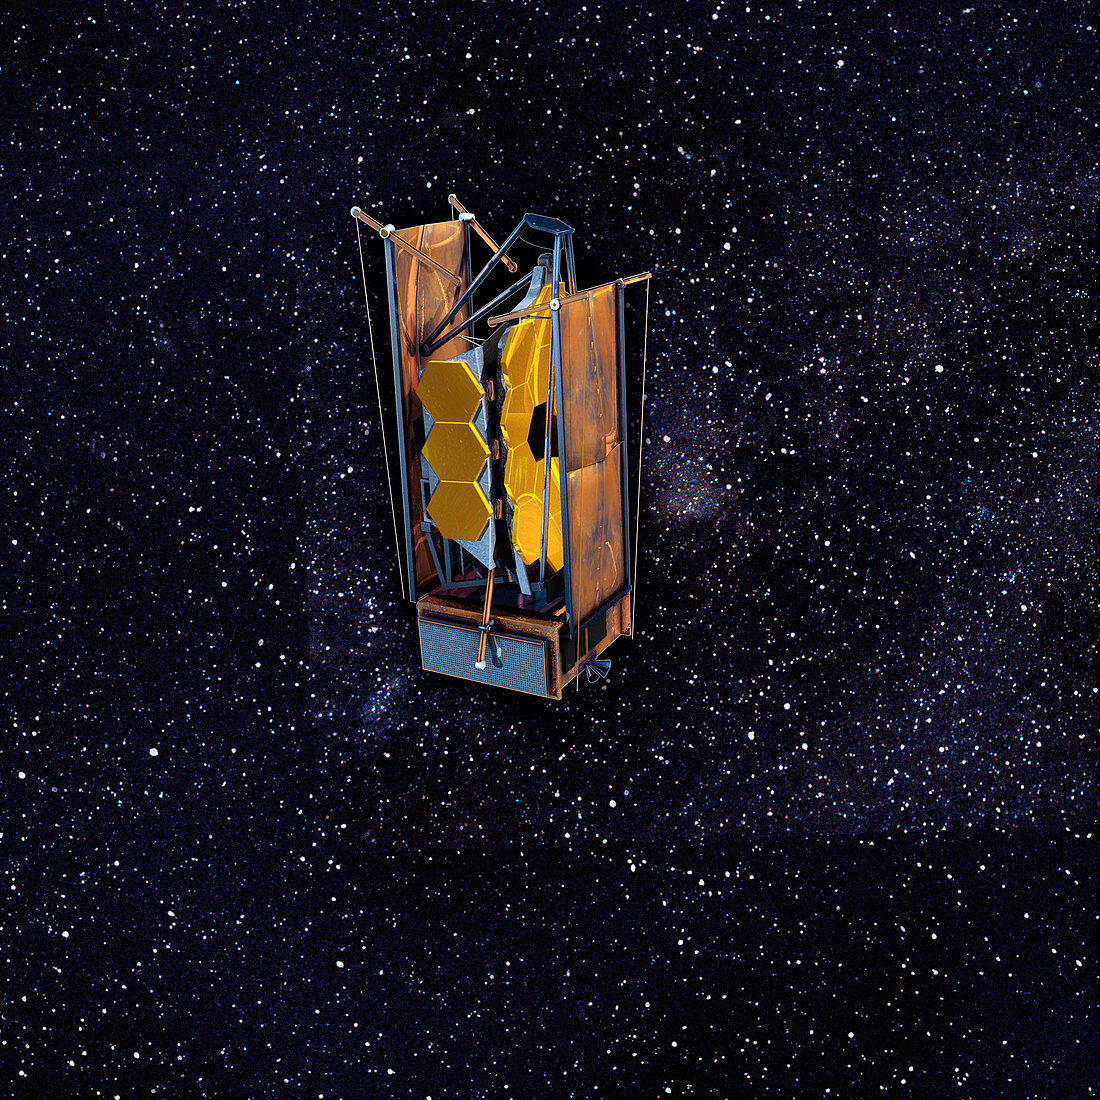 James Webb Space Telescope, illustration